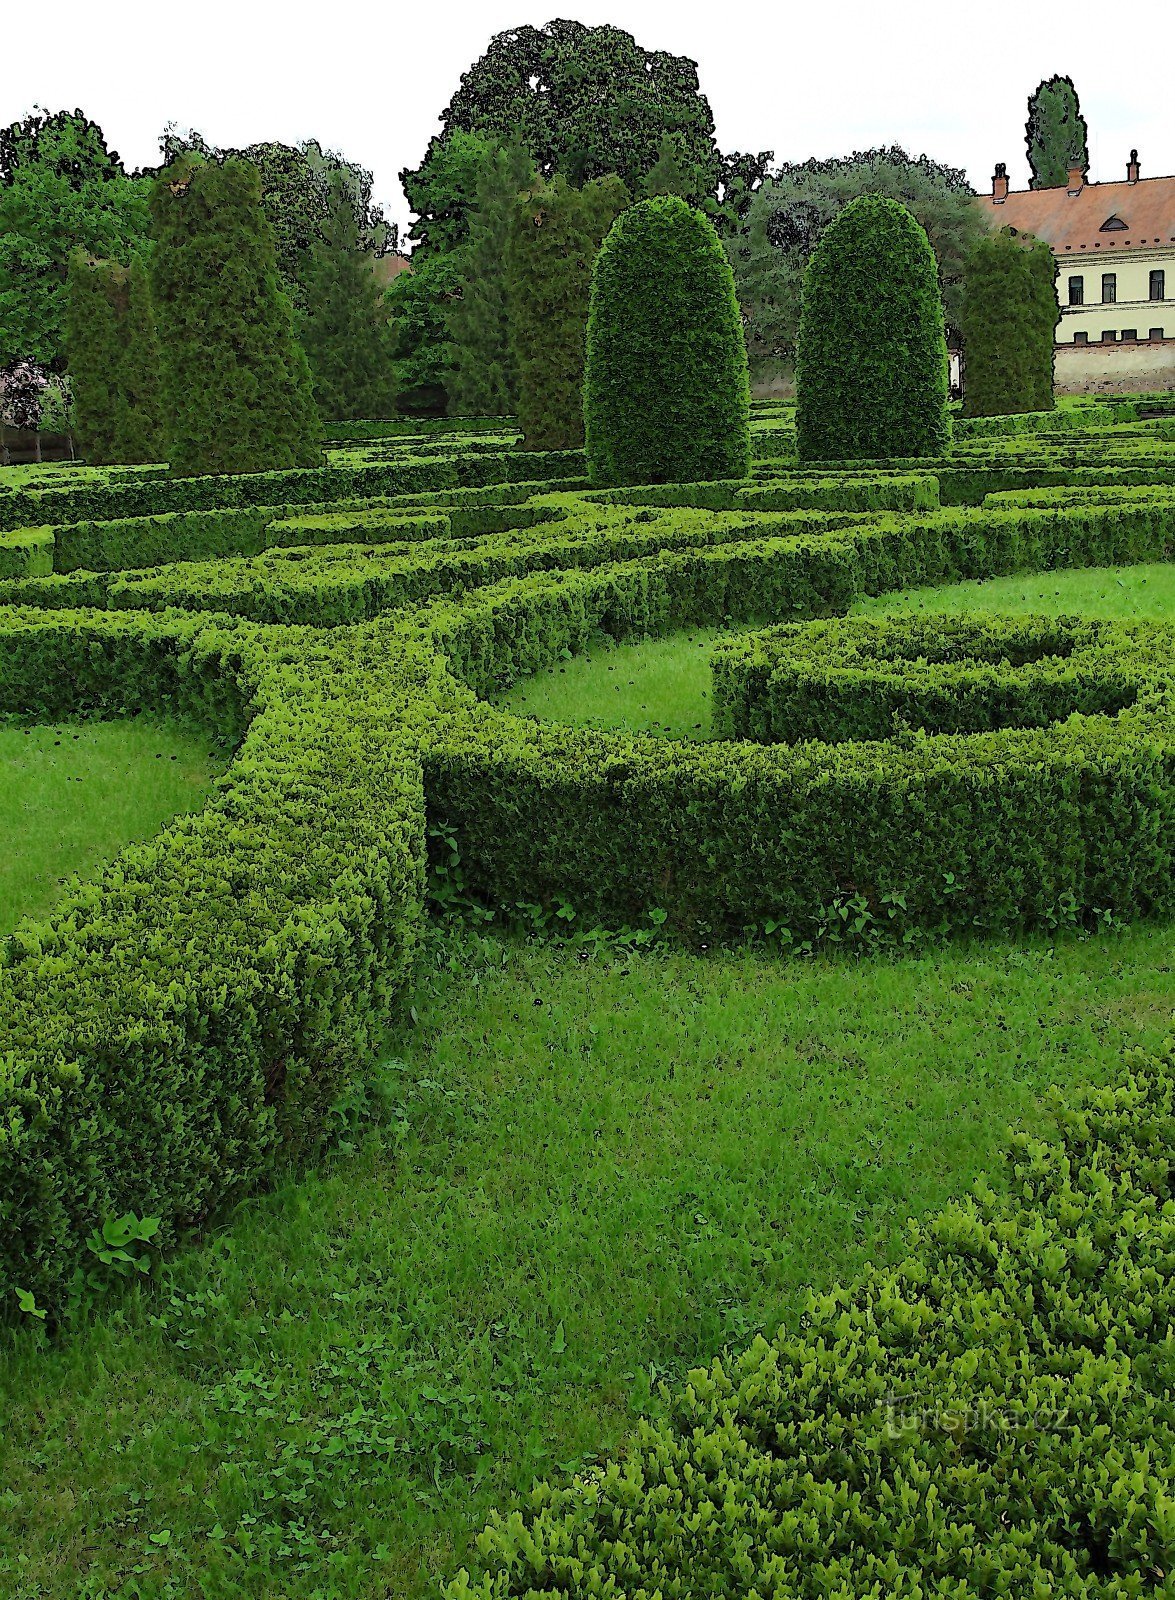 Renaissance castle garden in Bučovice